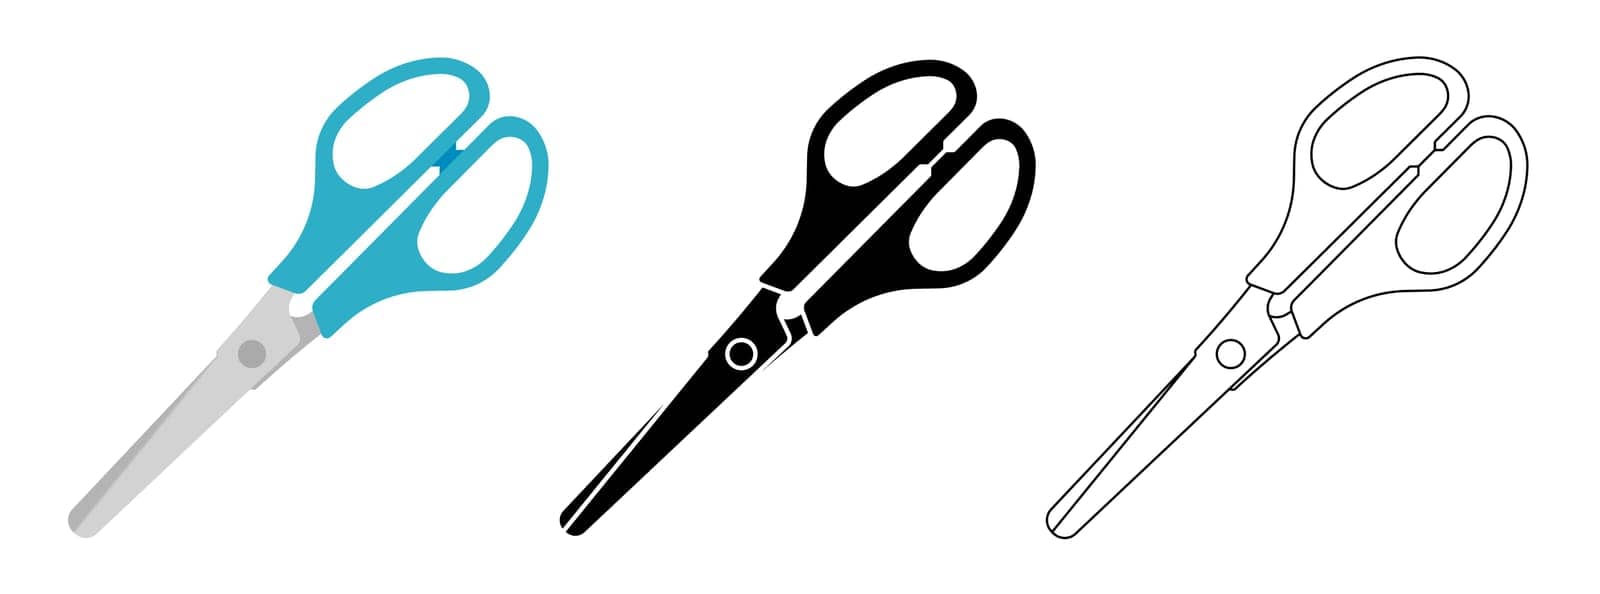 Scissors icons set. Isolated cutting scissors. Pictogram of scissor. Symbol of cutting. by Chekman